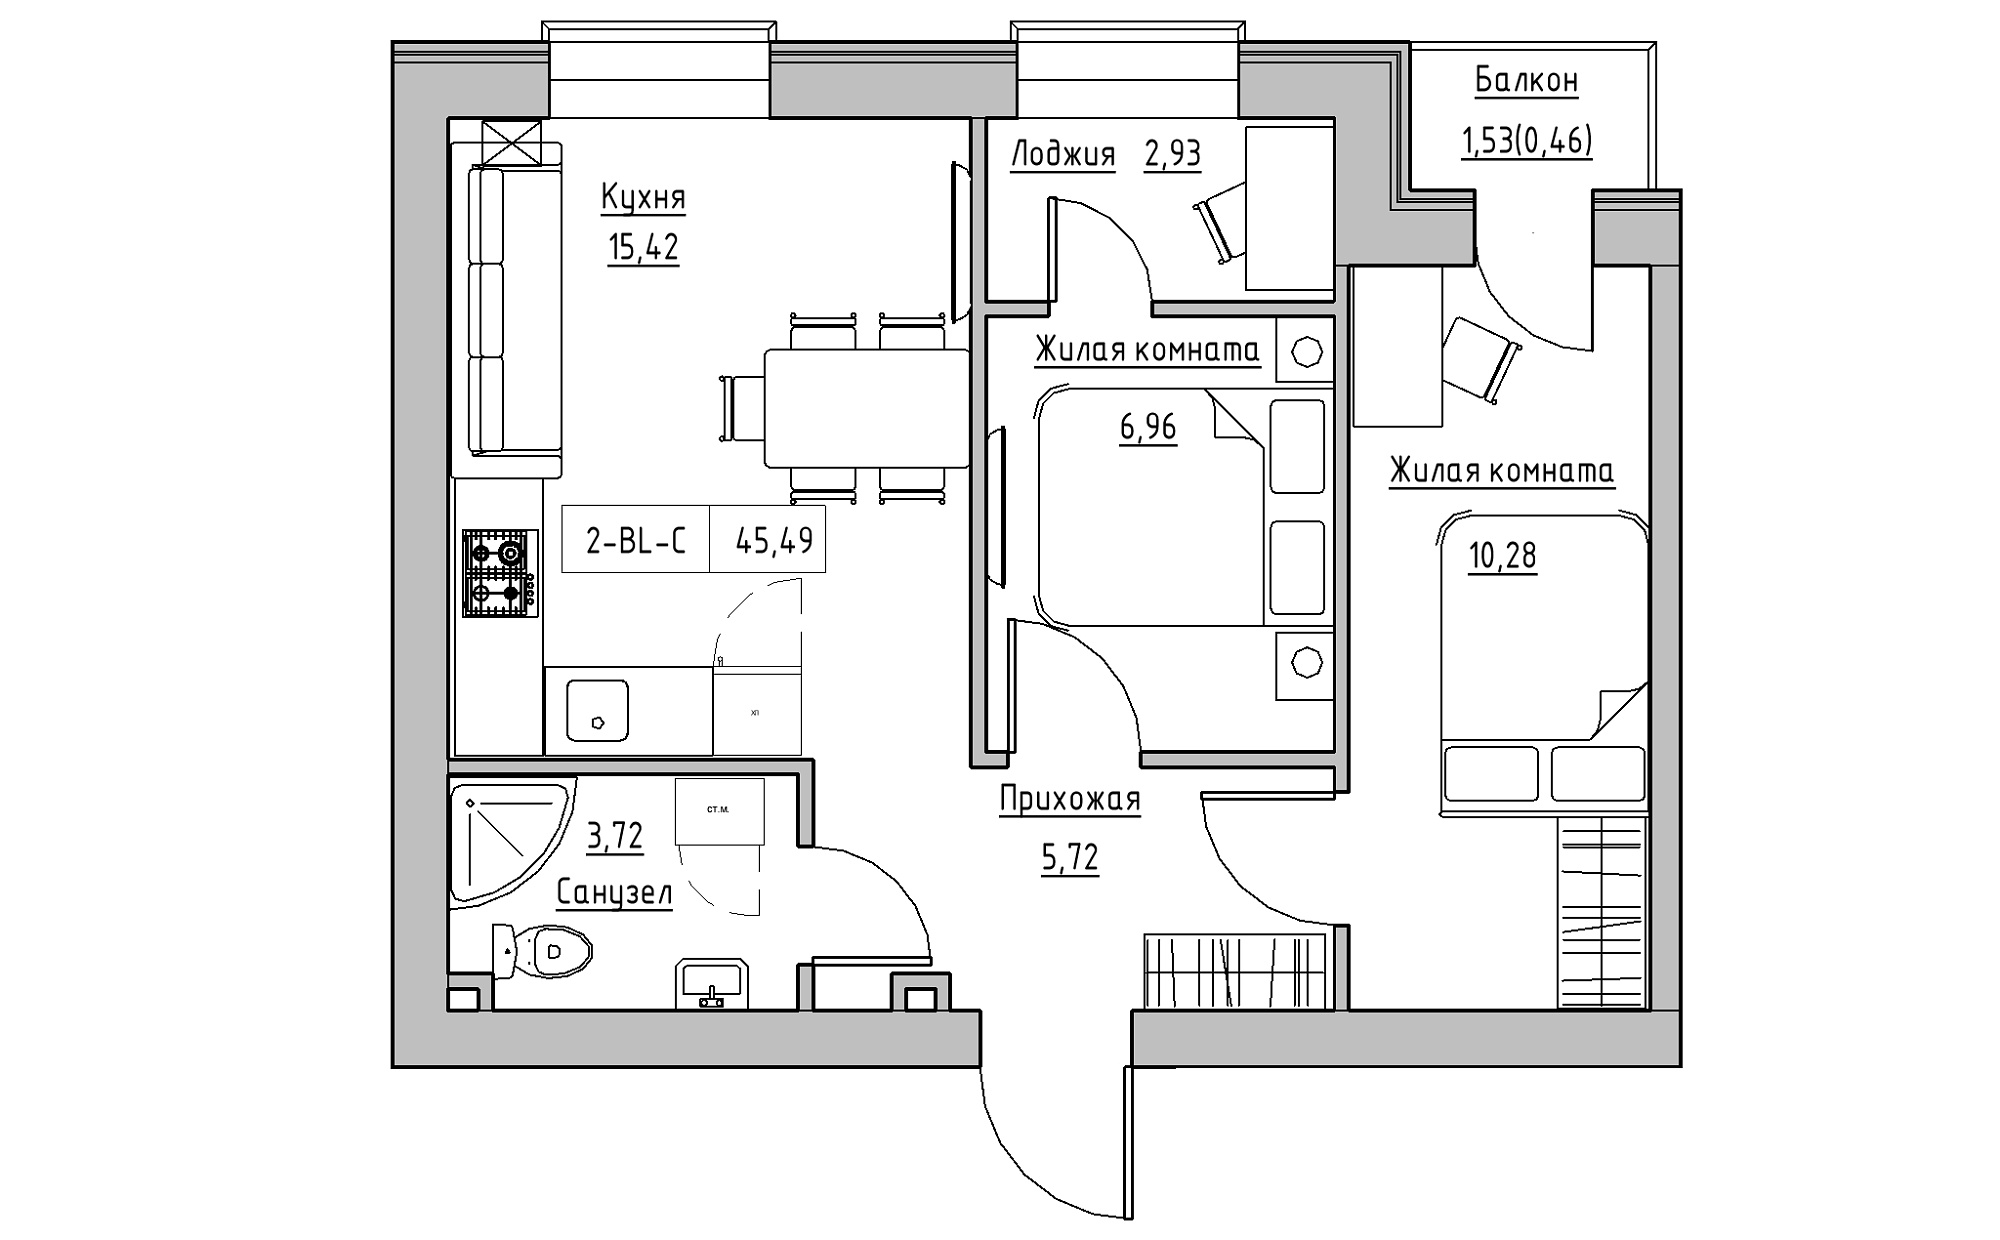 Planning 2-rm flats area 45.49m2, KS-022-03/0008.